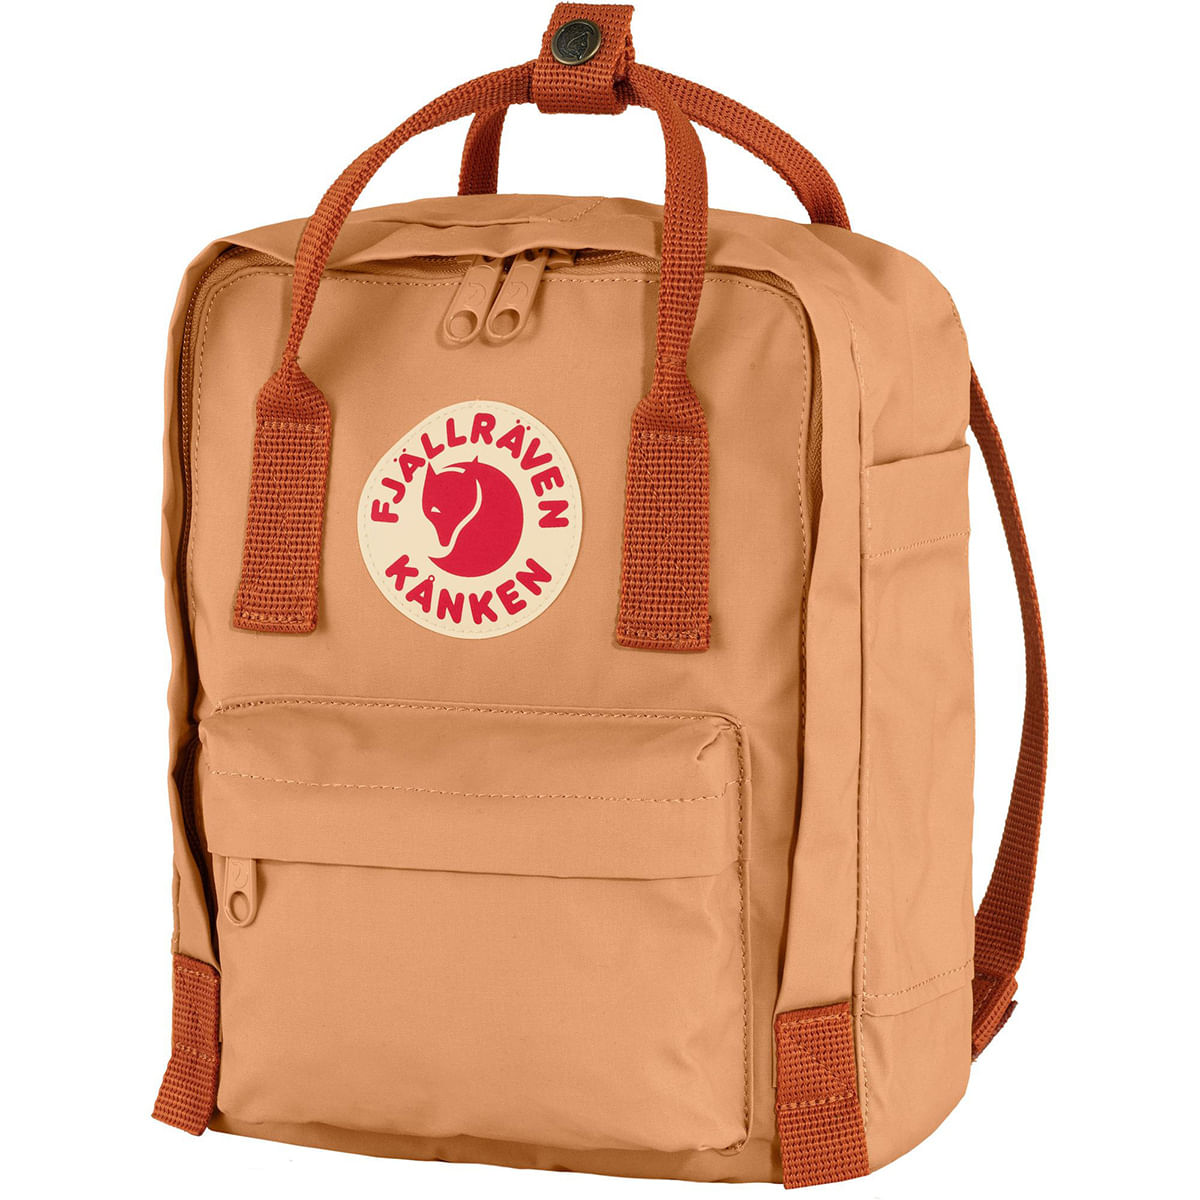 NEW Fjallraven Kanken Mini Everyday Outdoor Durable Backpack - Peach Sand  23561